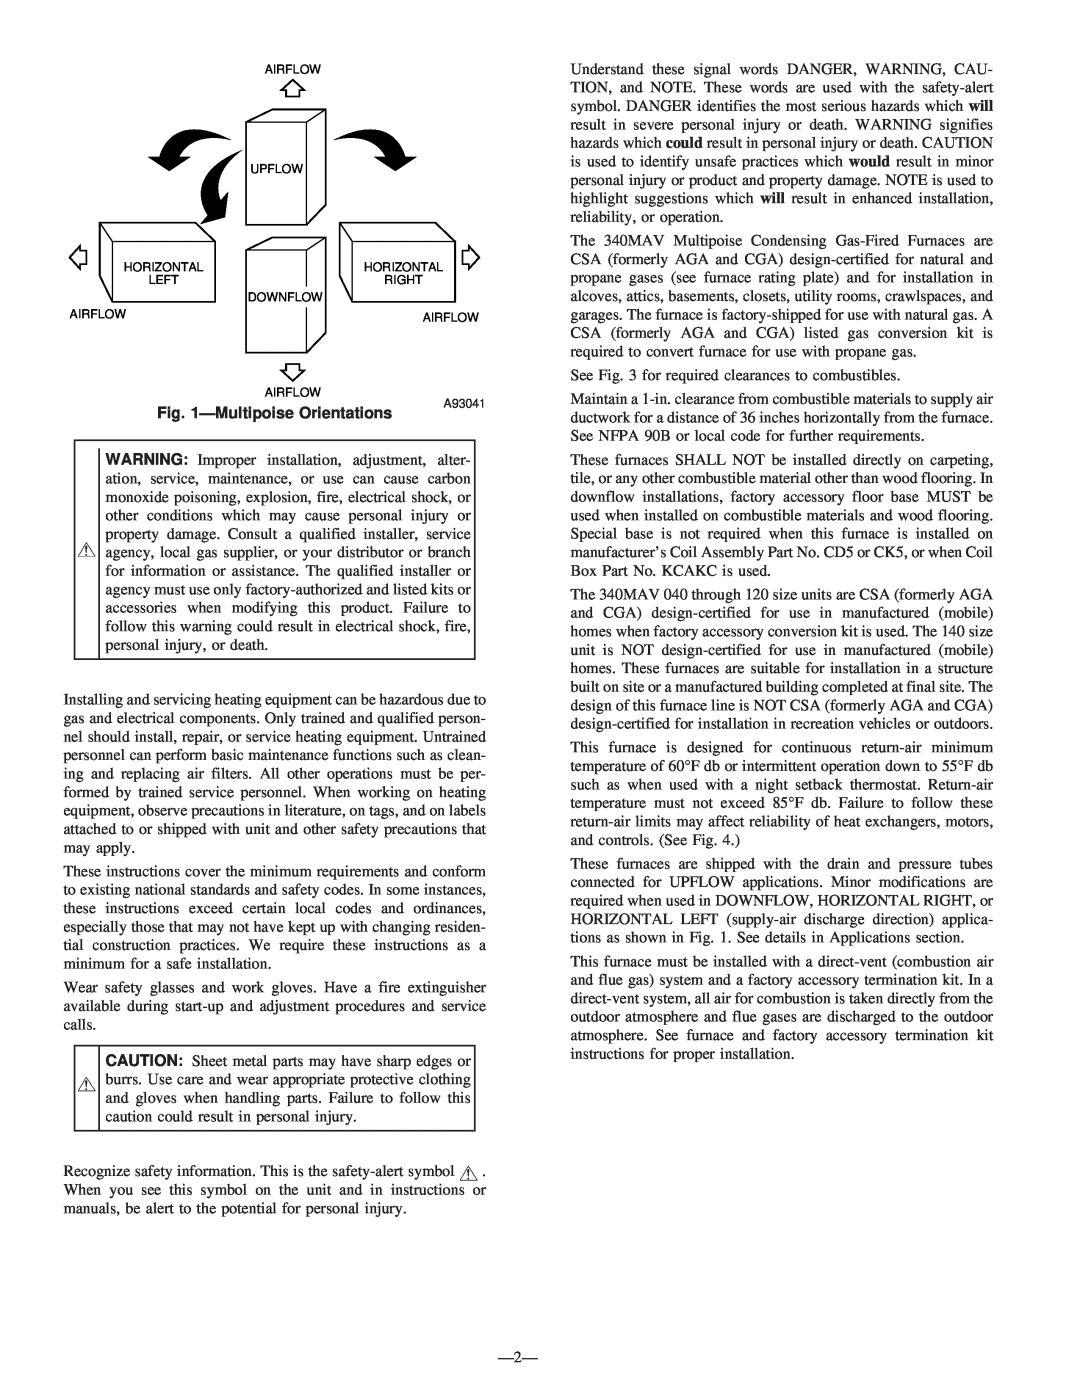 Bryant 340MAV instruction manual MultipoiseOrientations 